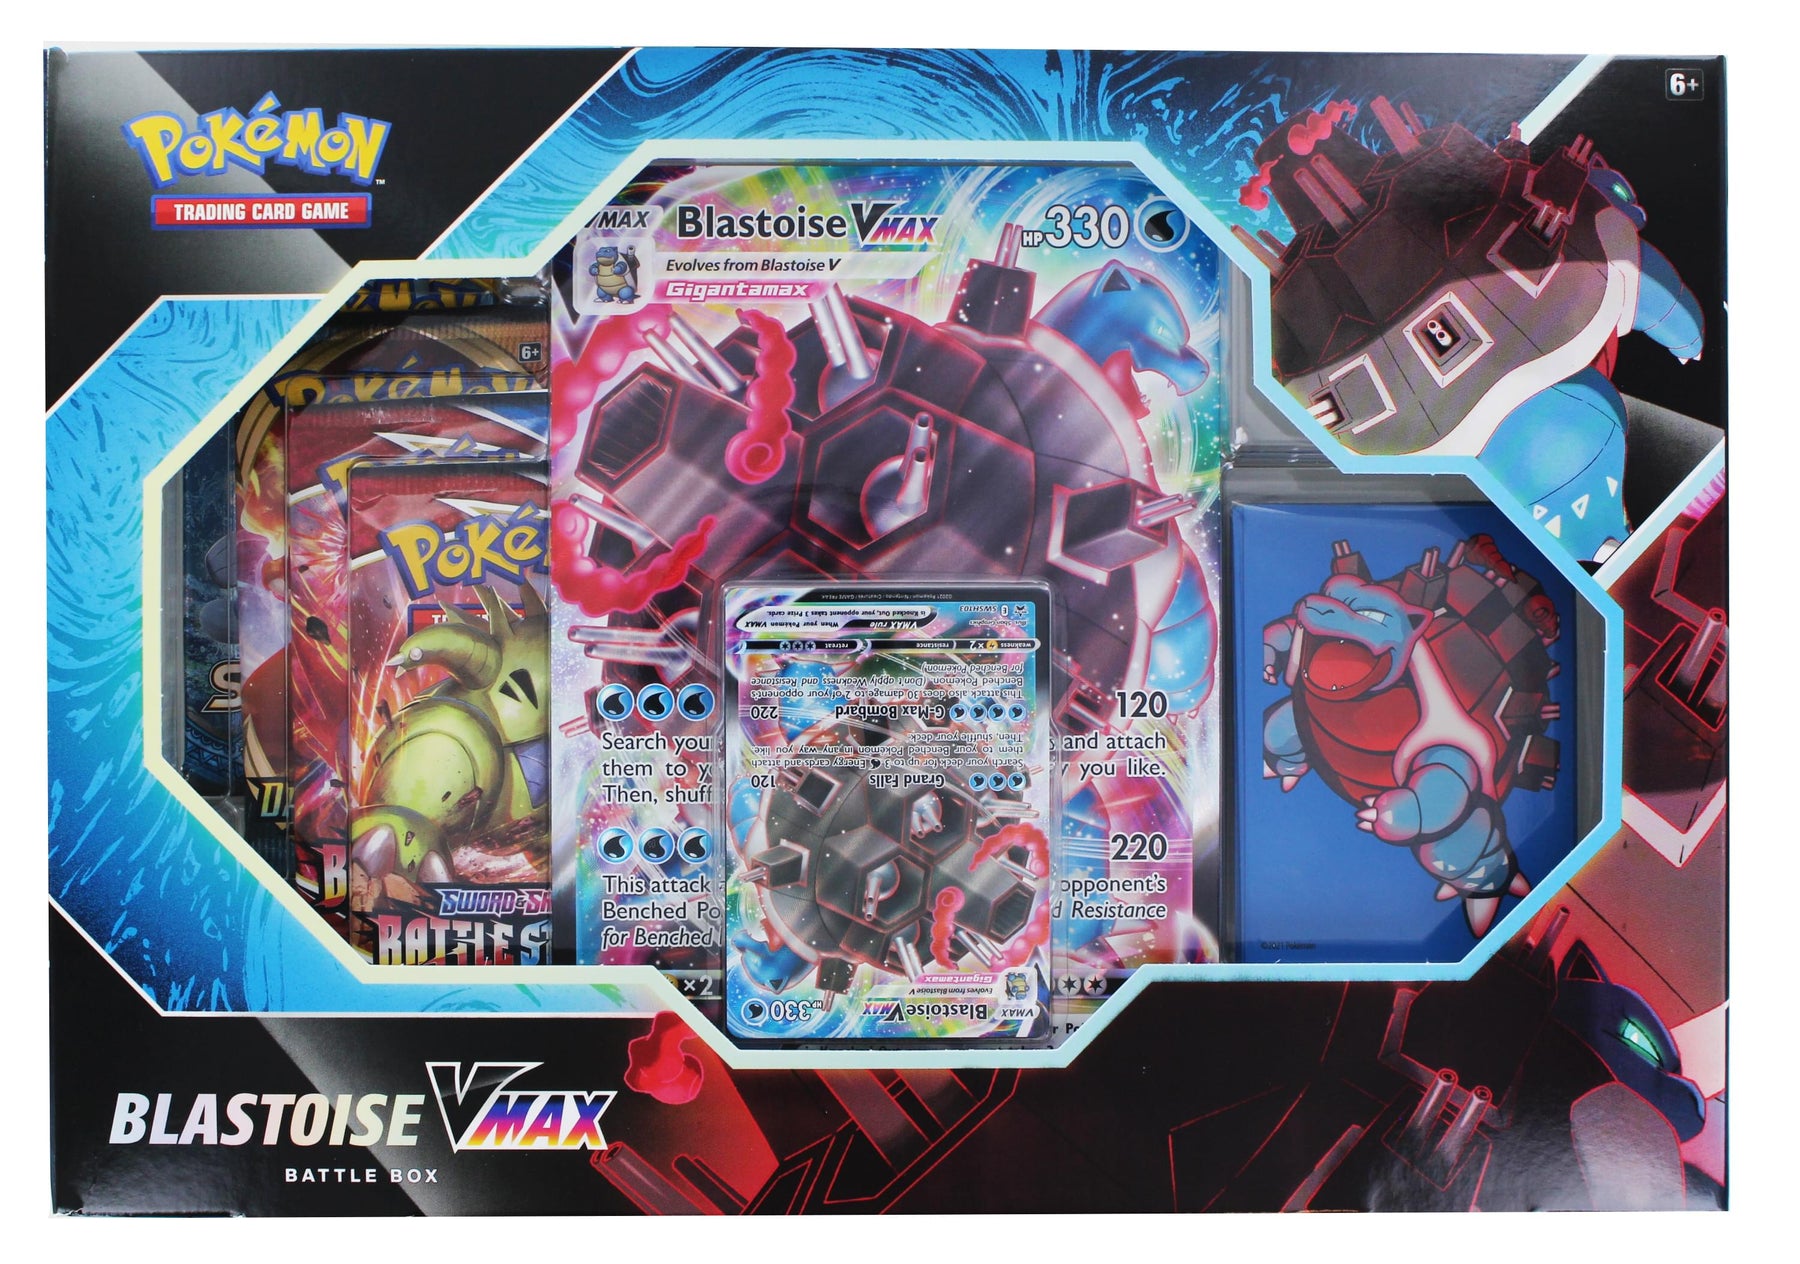 Pokémon TCG Blastoise VMAX Battle Box